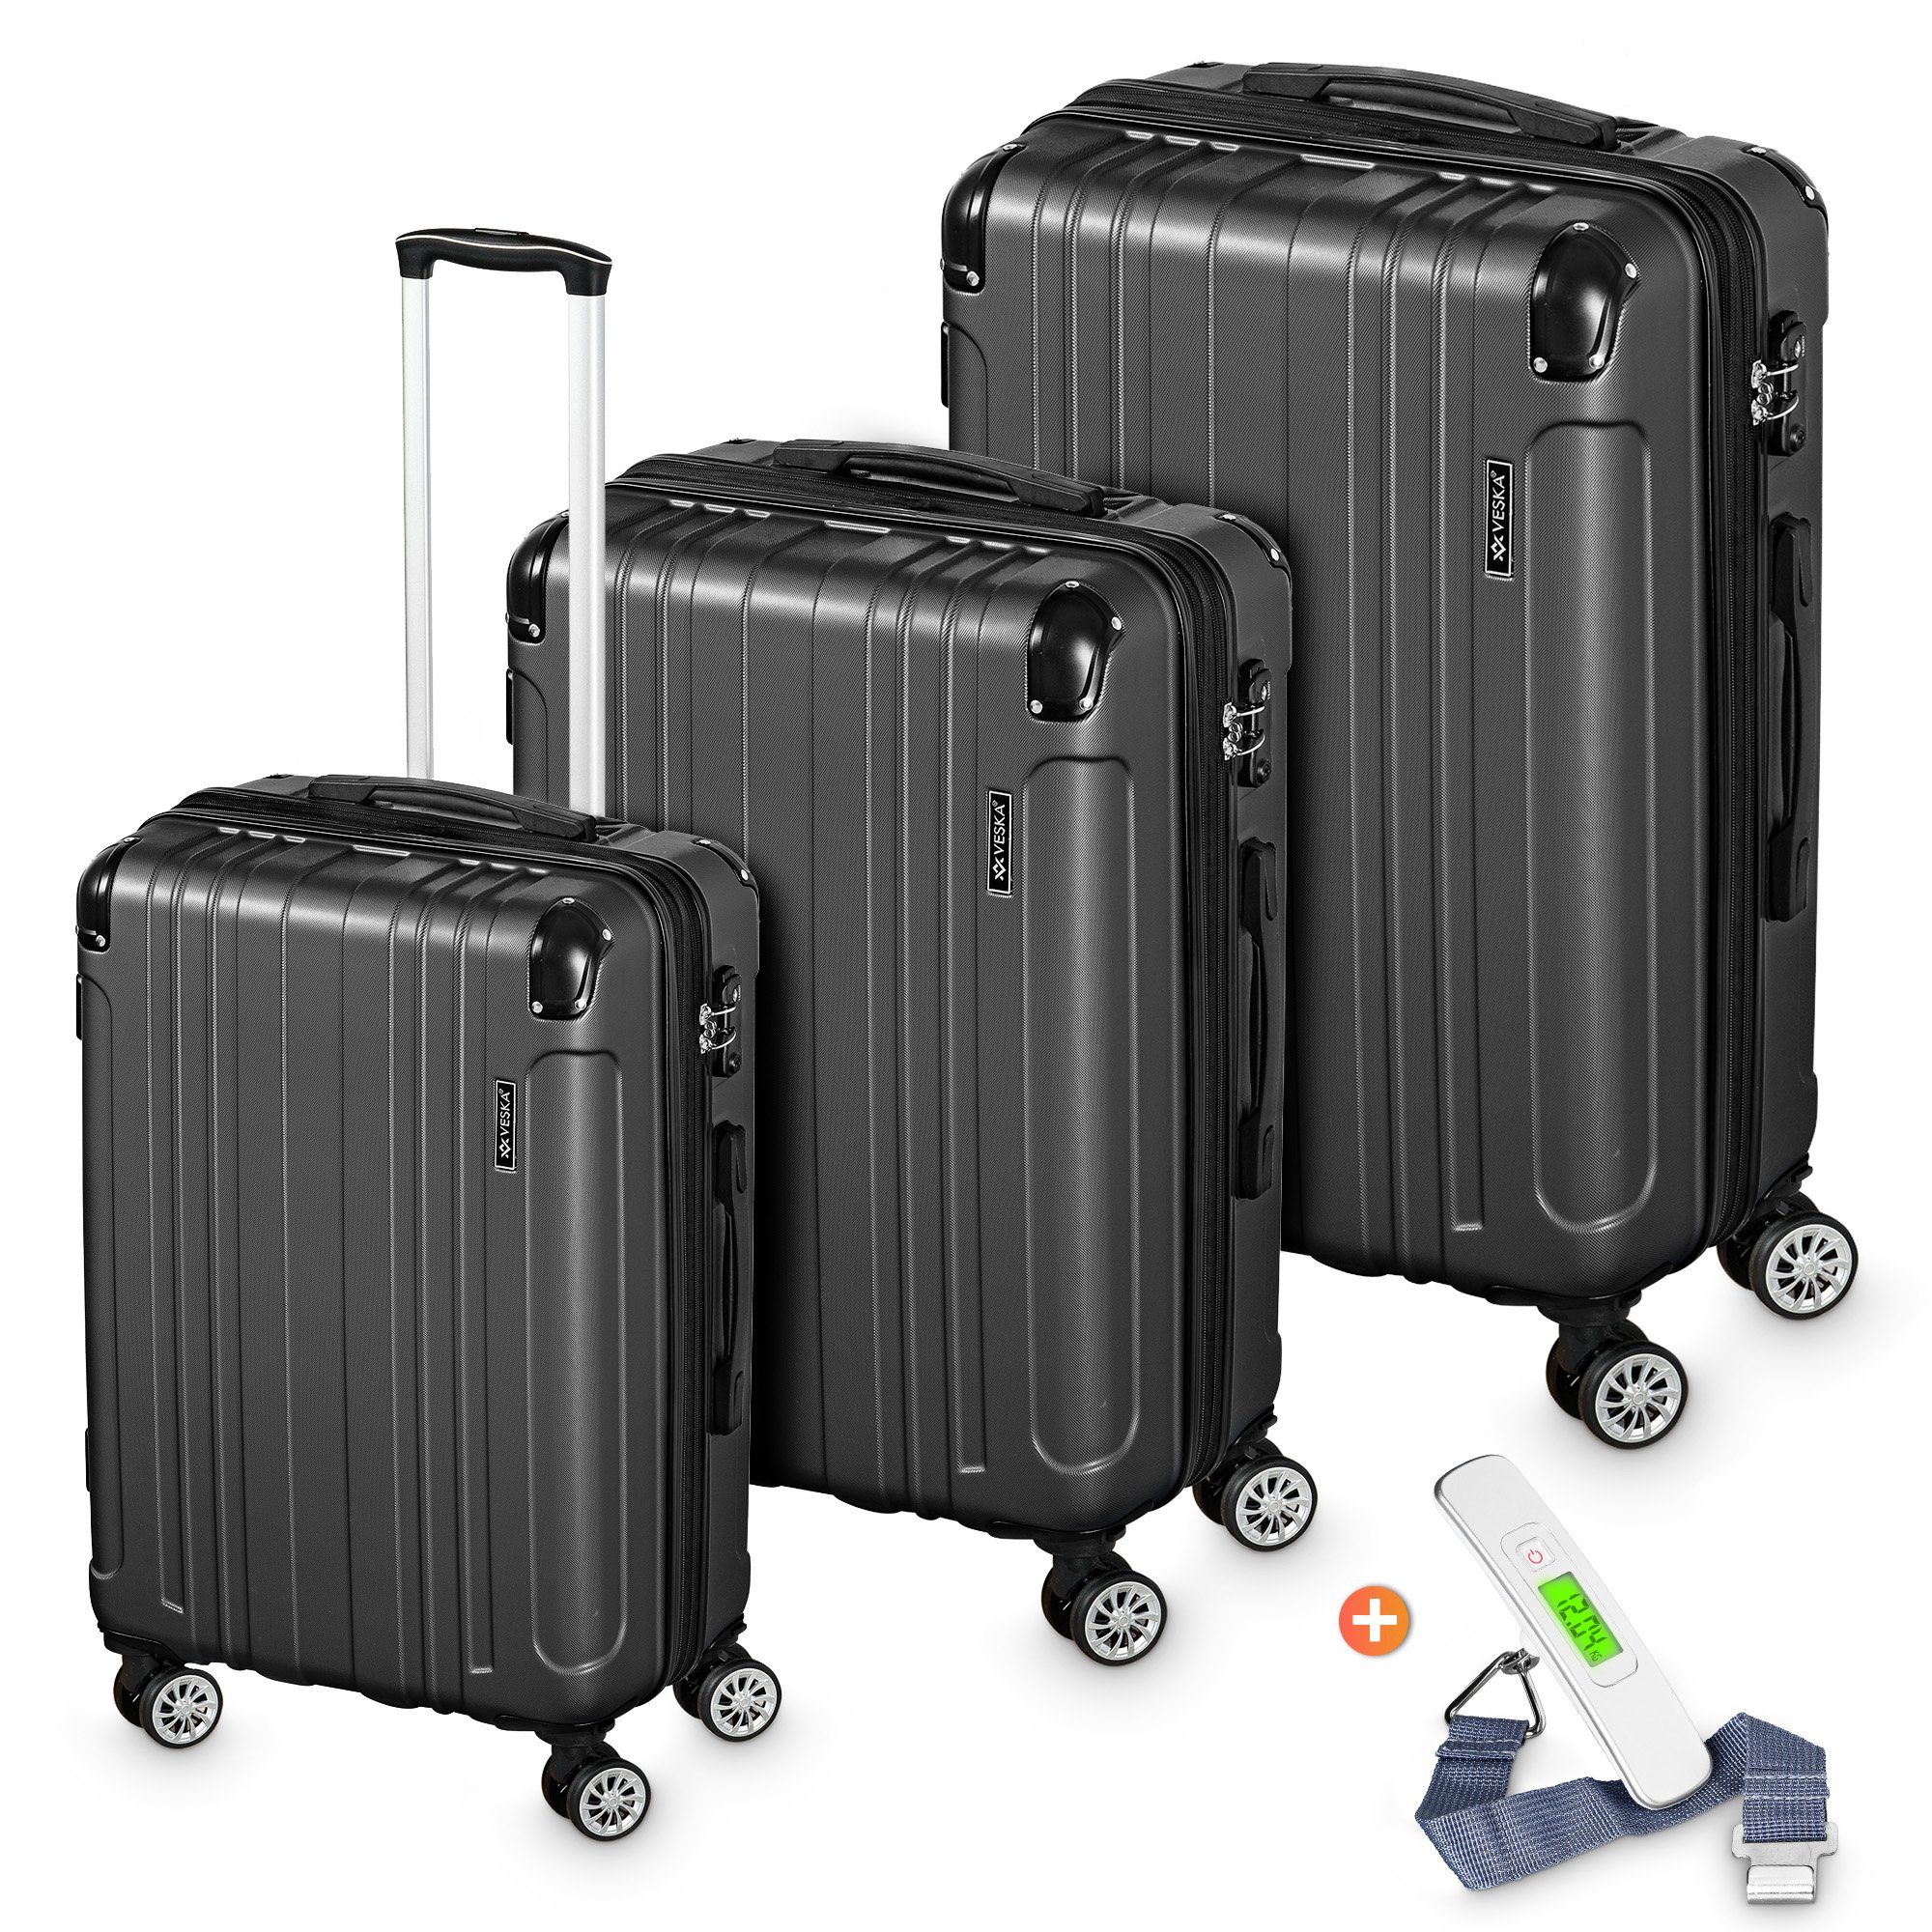 Reisekoffer Trolleyset mit TSA anthrazit 4 Zahlenschloss teilig Hartschalenkoffer Kofferset Trolley 3 Koffer Rollkoffer ABS-Hartschale, VESKA Rollen,